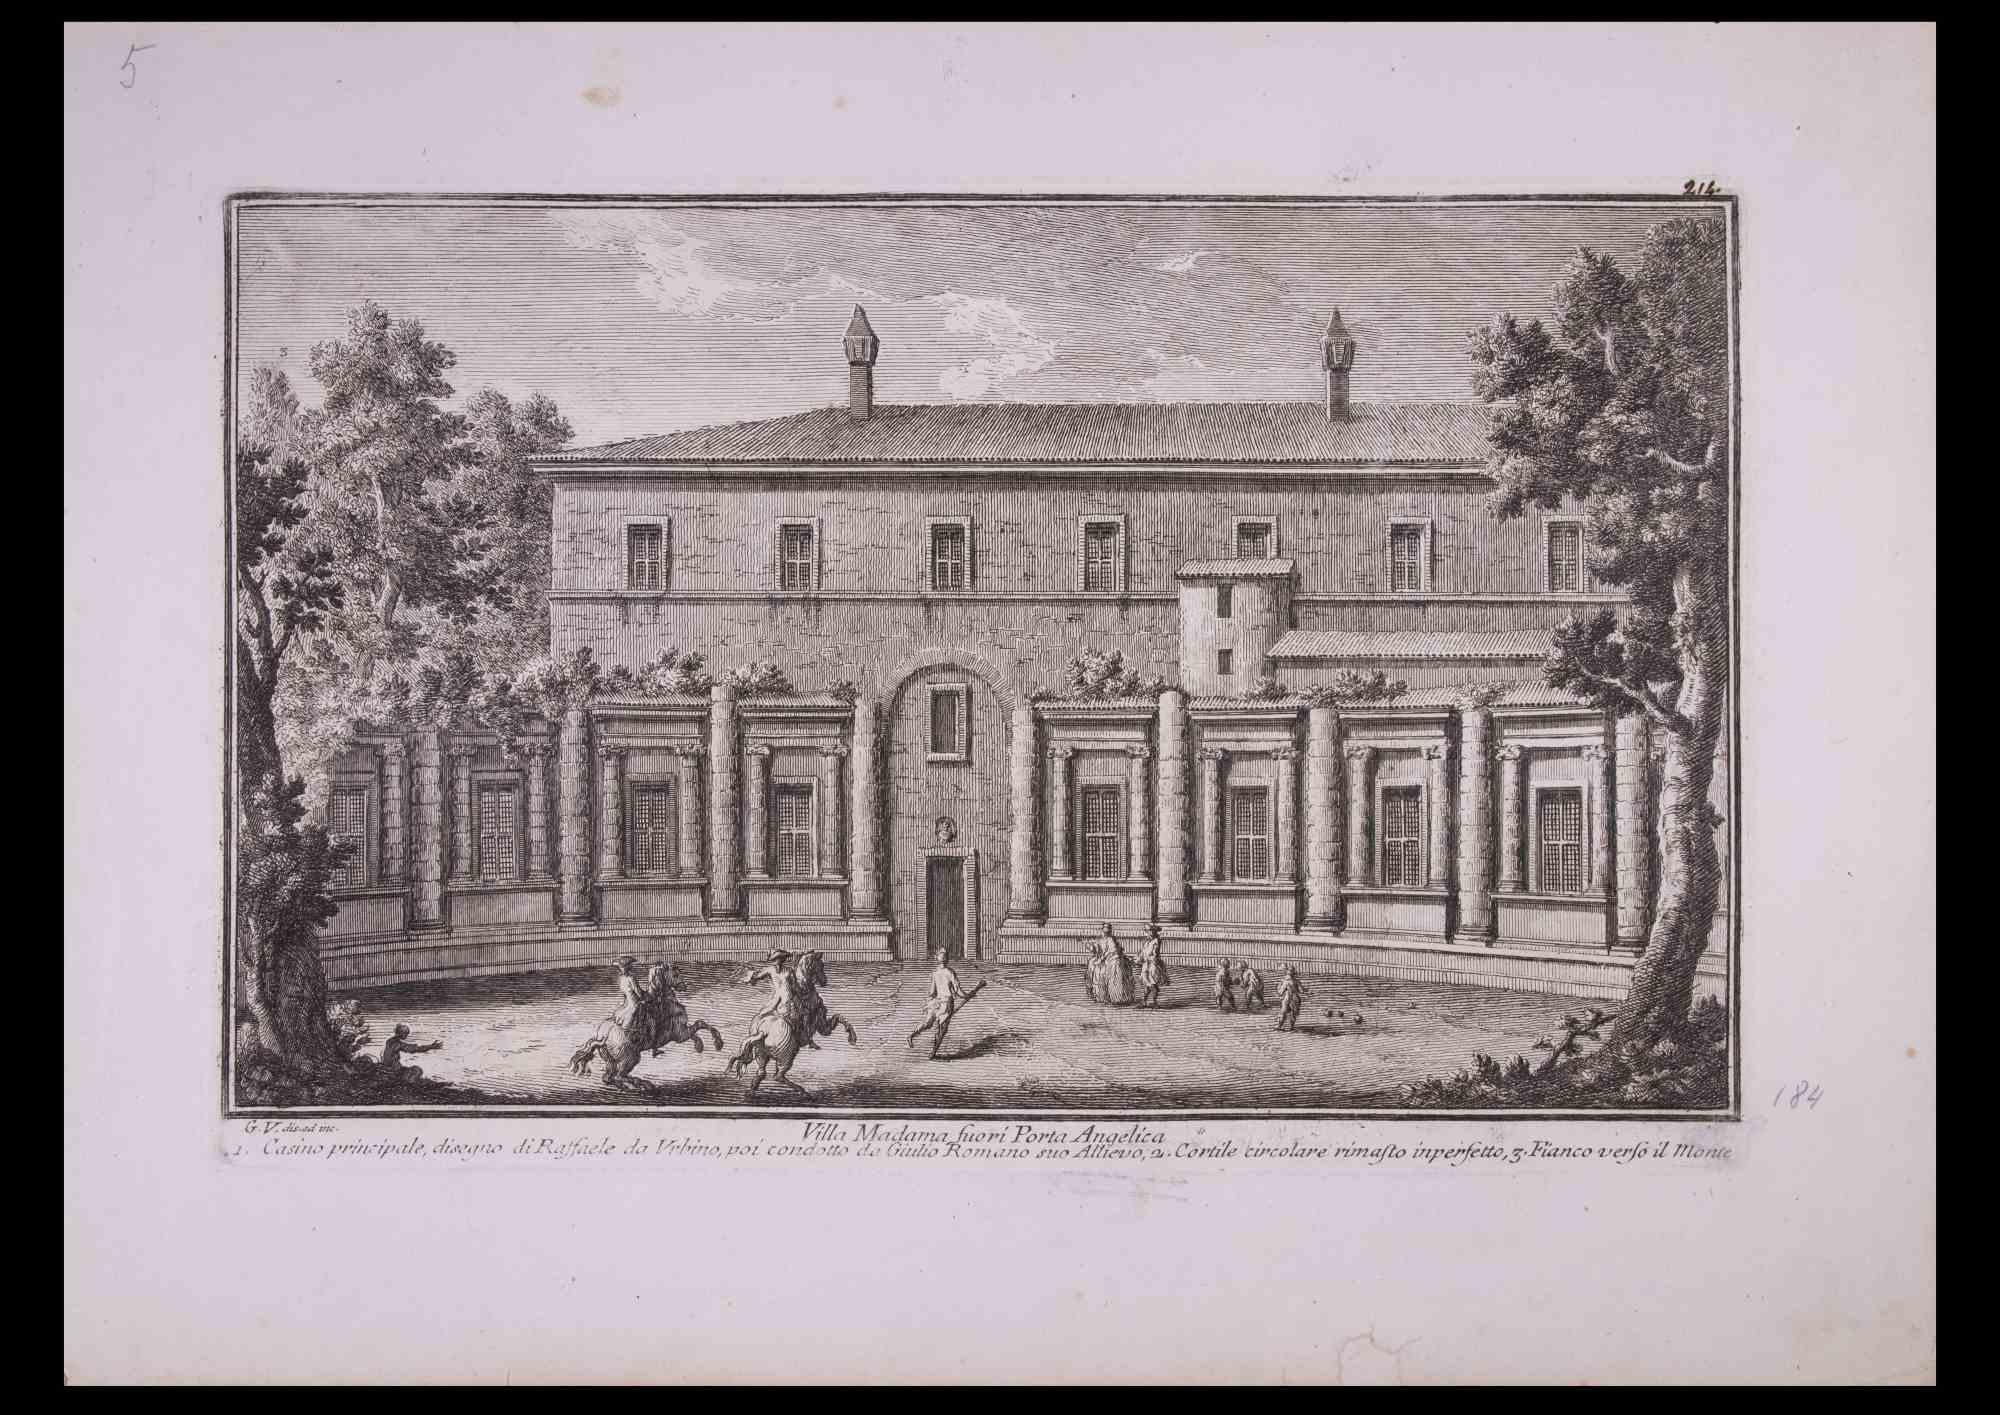 Giuseppe Vasi Figurative Print – Villa Madama Fuori Porta Angelica - Radierung von G. Vasi - Ende des 18. Jahrhunderts